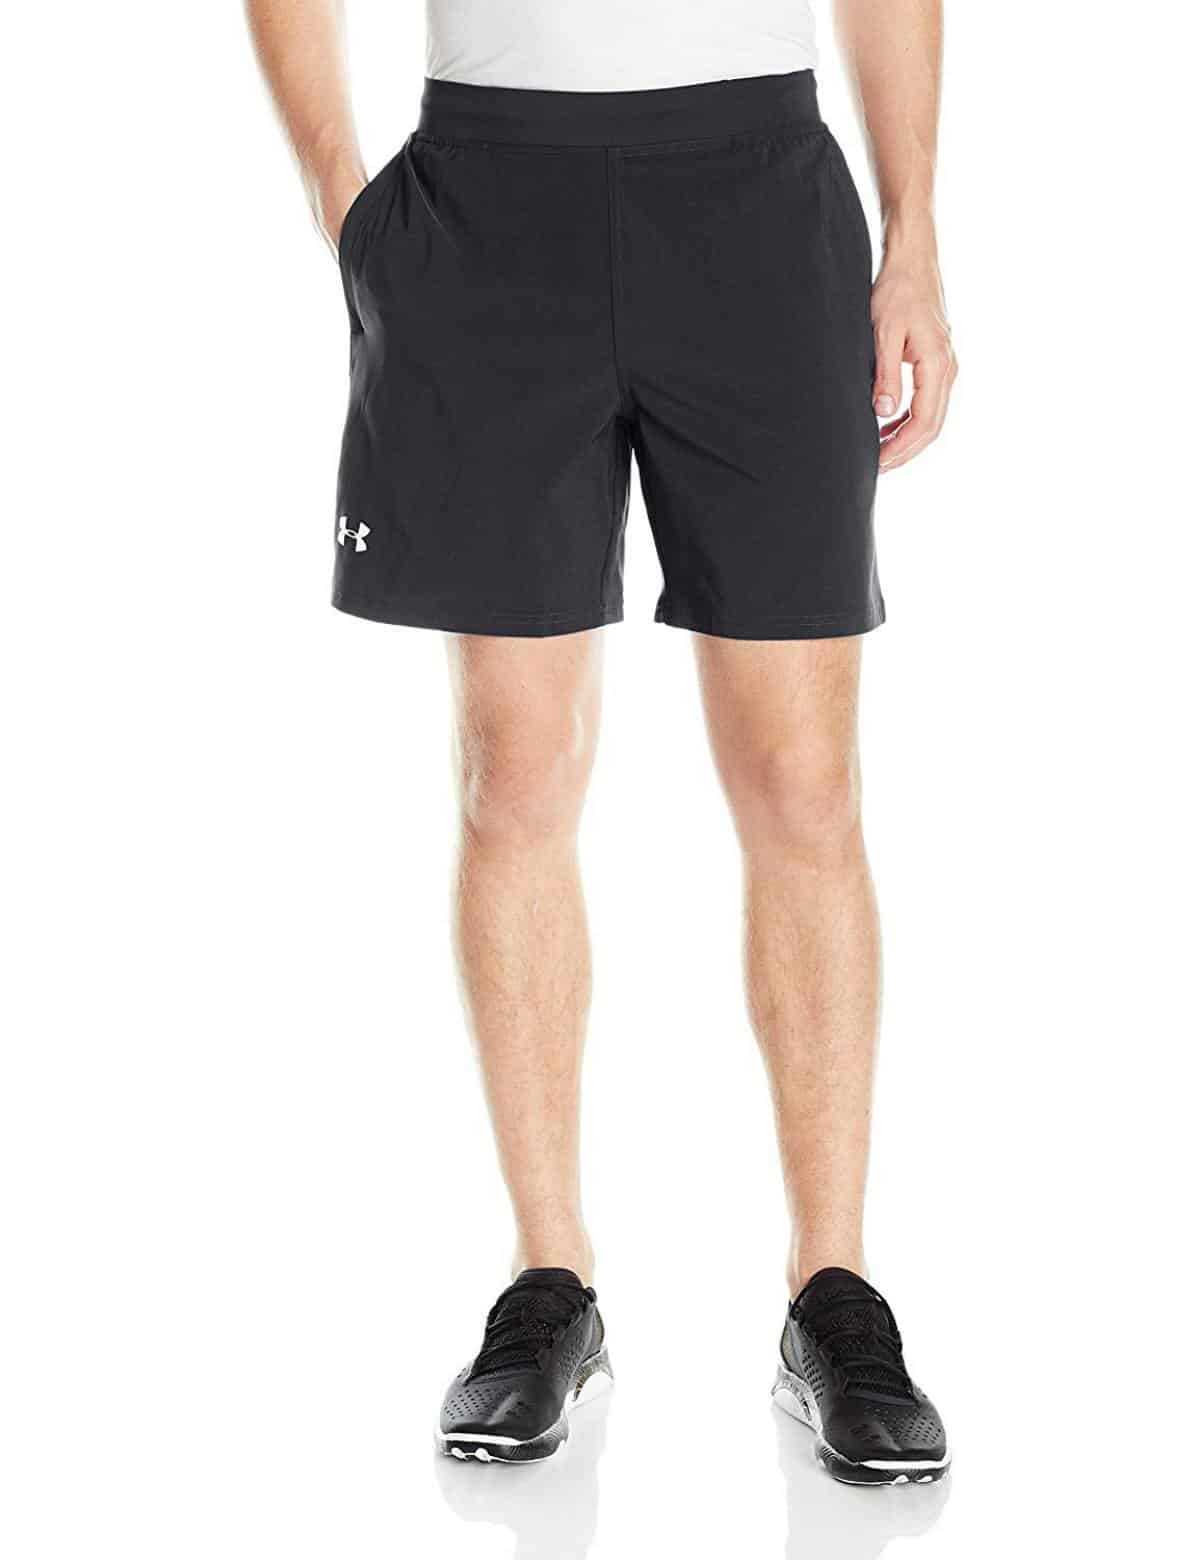 Under Armour Men's Speedpocket 7" Shorts | Best Low Tech Gifts Anyone Will Love